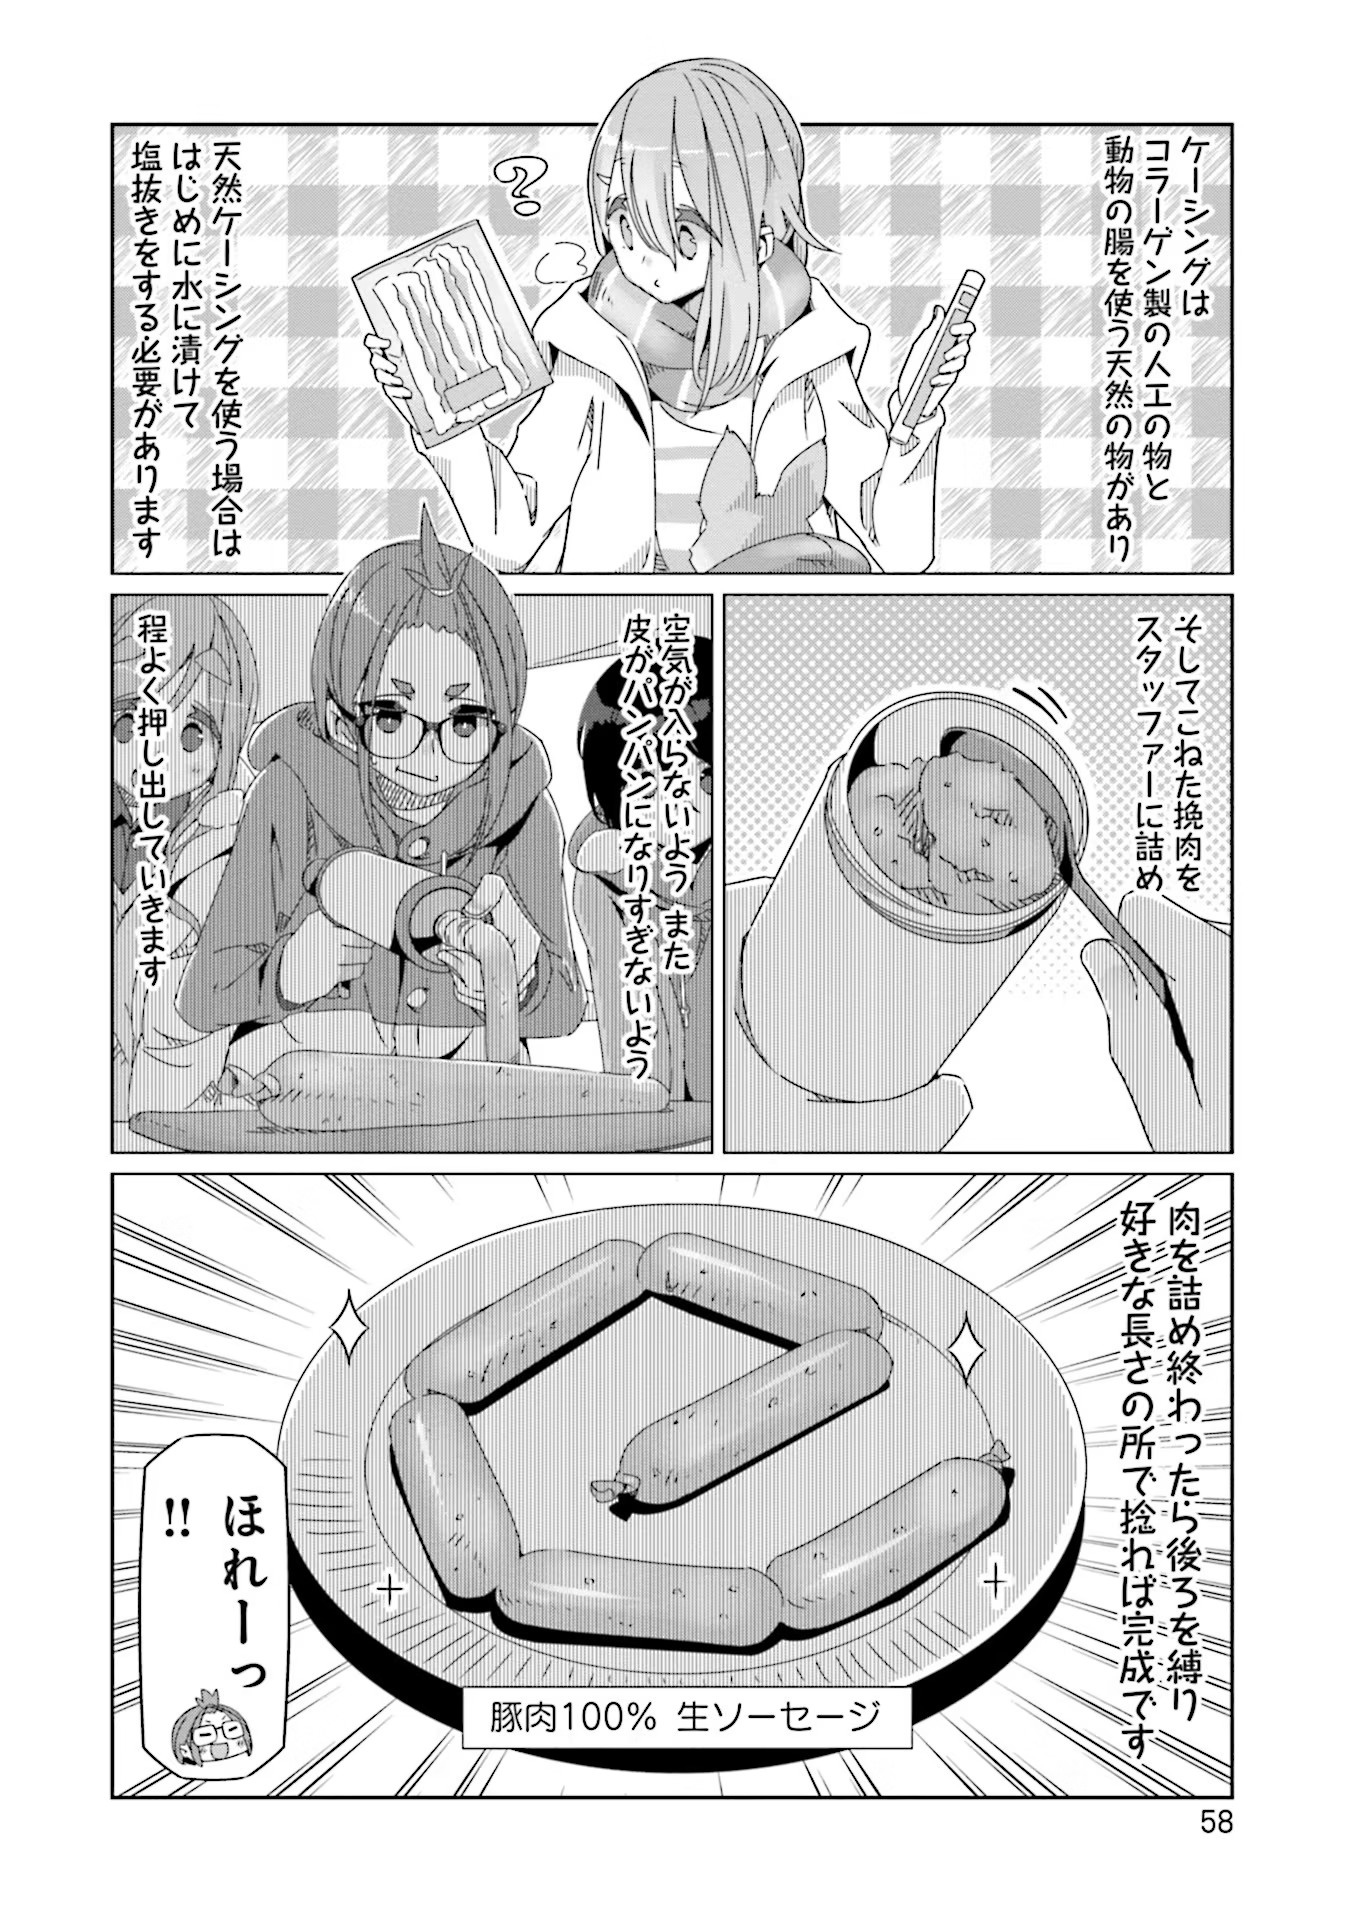 Yuru Camp - Chapter 55 - Page 4